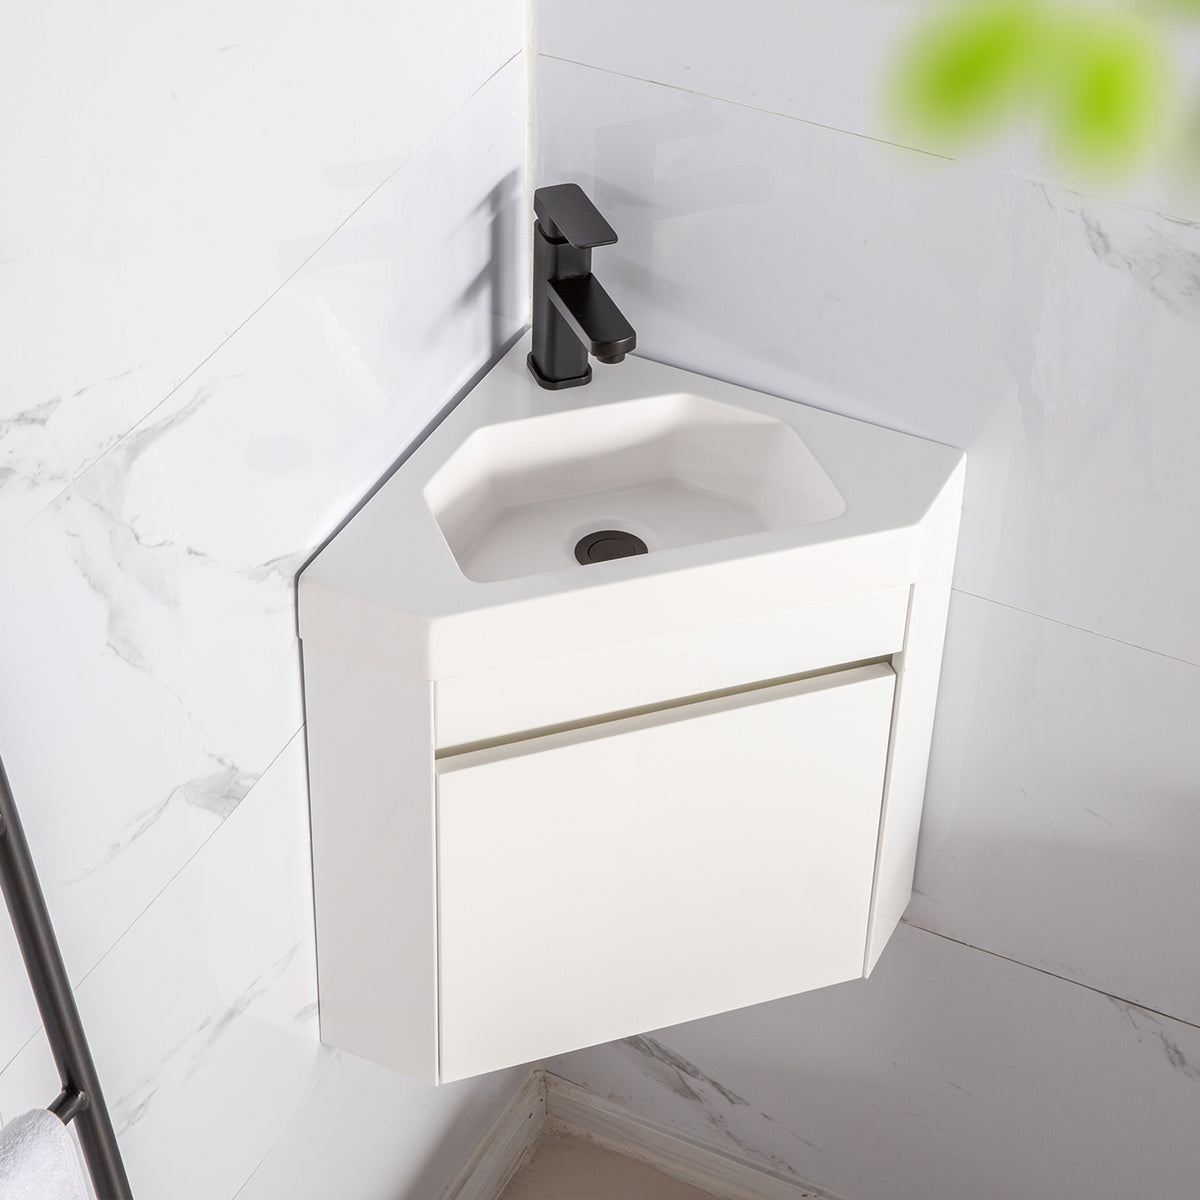 eclife 22" Corner Bathroom Vanity Sink Combo, Wall Mounted Floating Cabinet